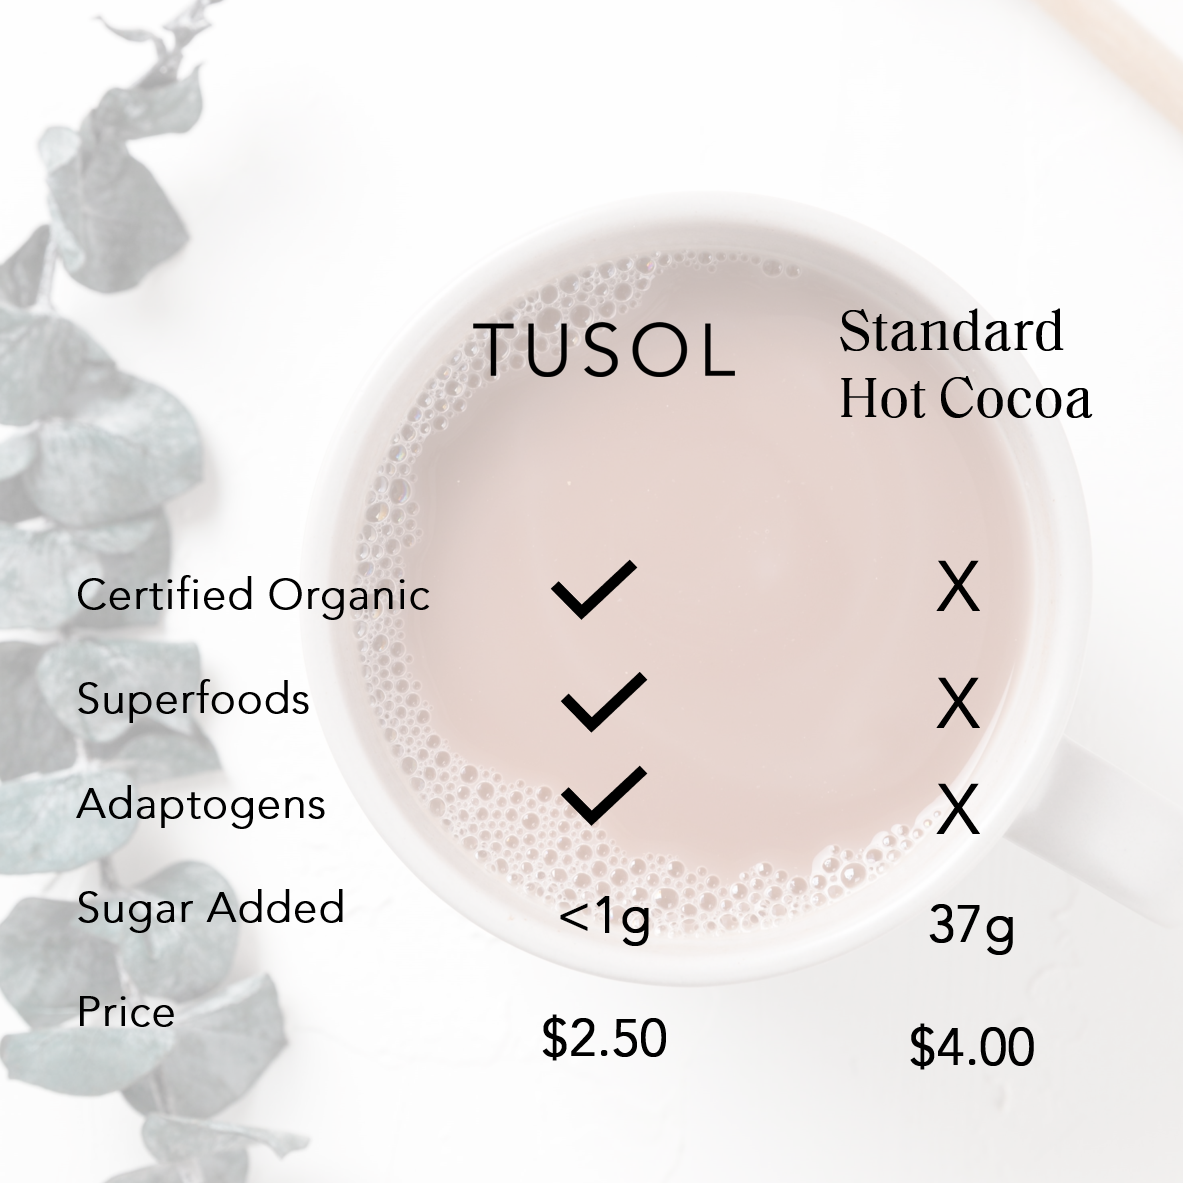 TUSOL Organic Latte Kit